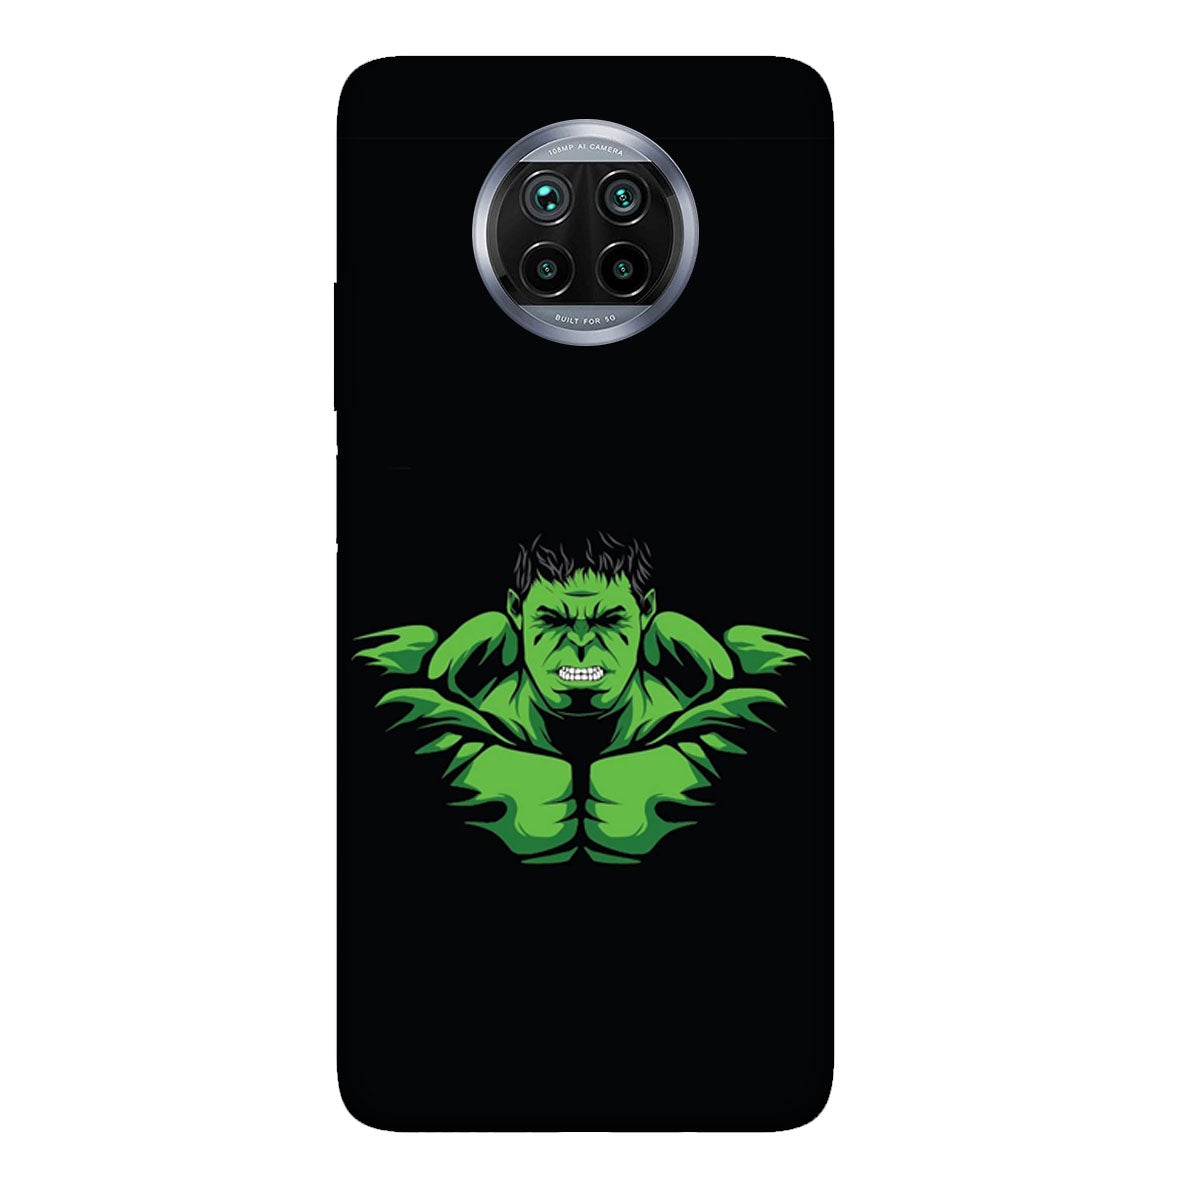 The Hulk - Black - Mobile Phone Cover - Hard Case